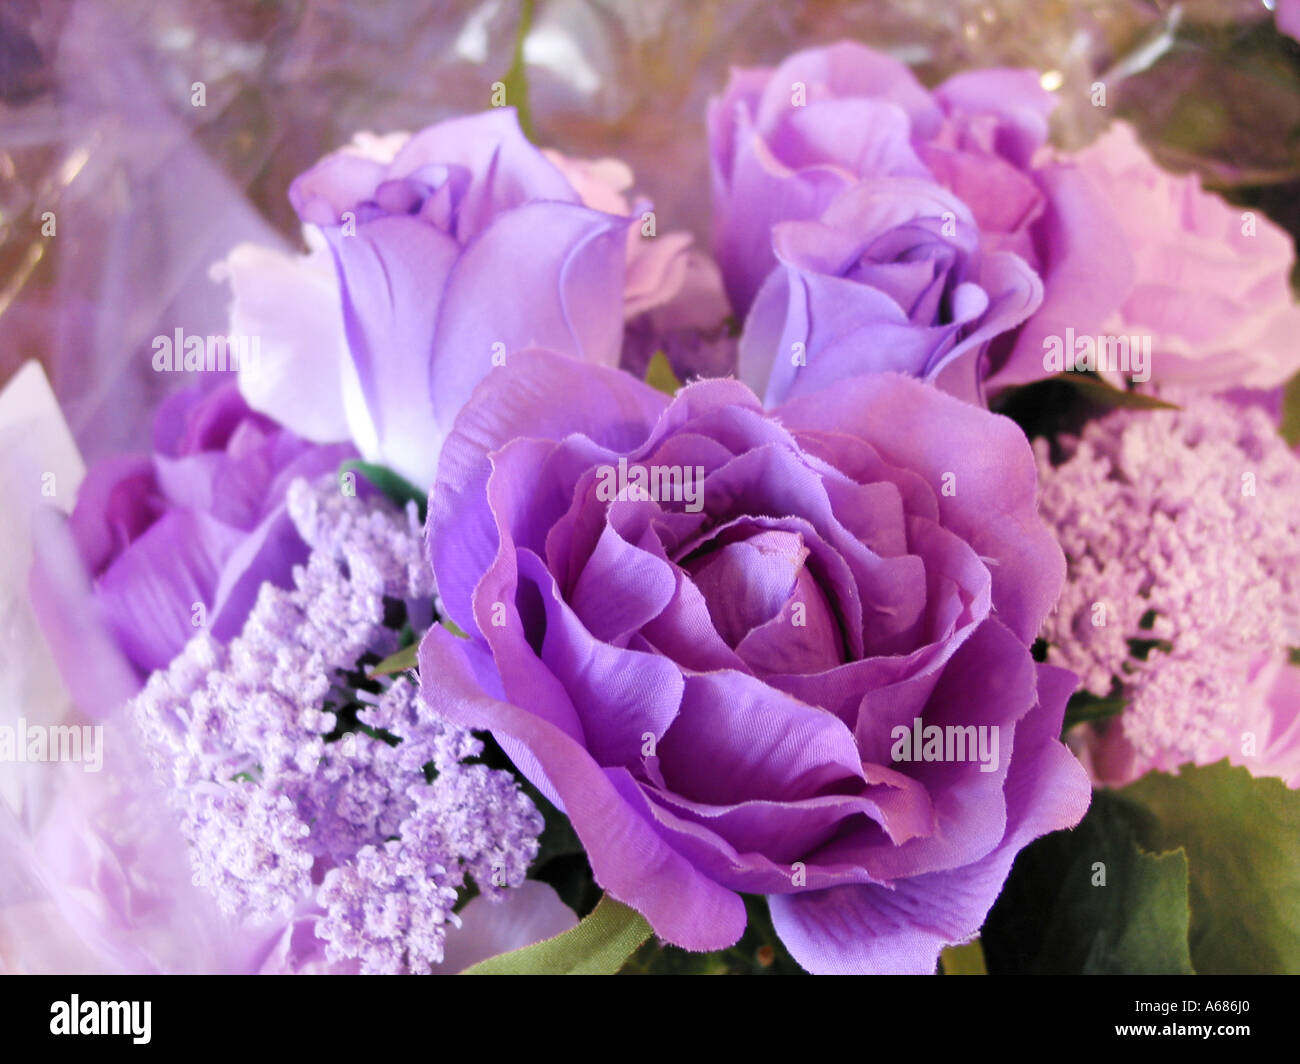 flower arrangement with purple artificial flowers Stock Photo